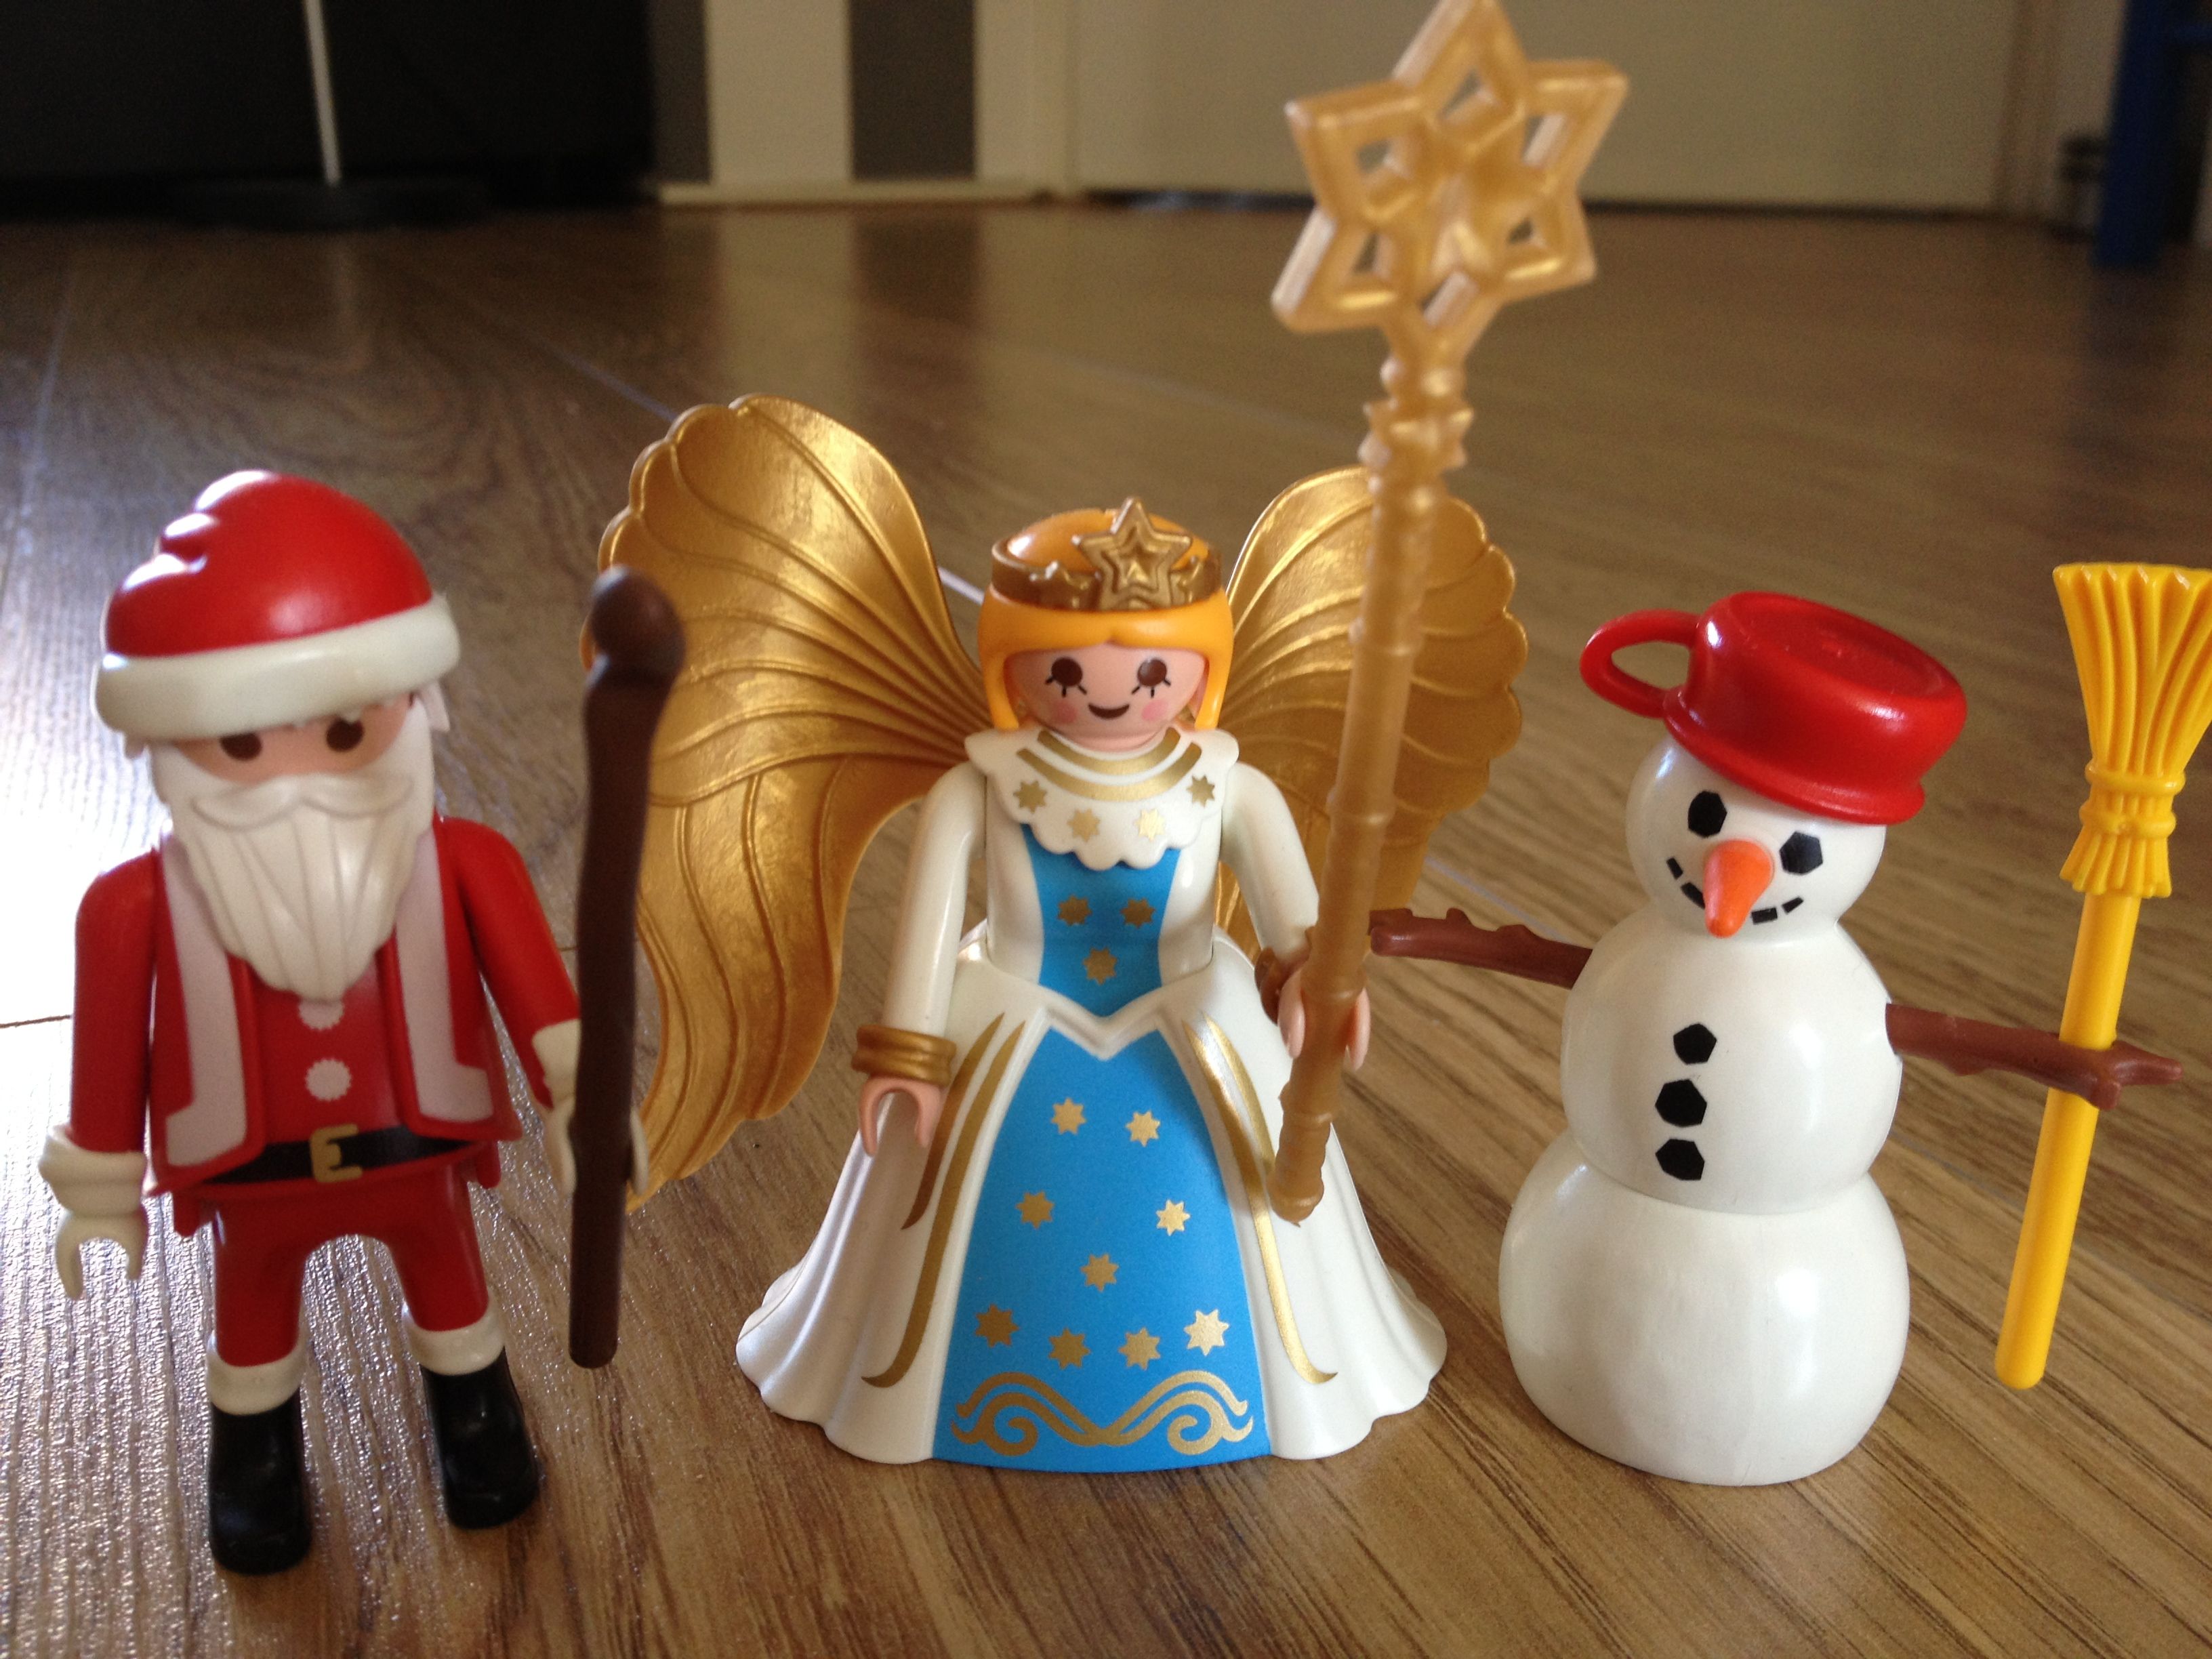 Playmobil Christmas figures | Gotta get this!! | Pinterest ...